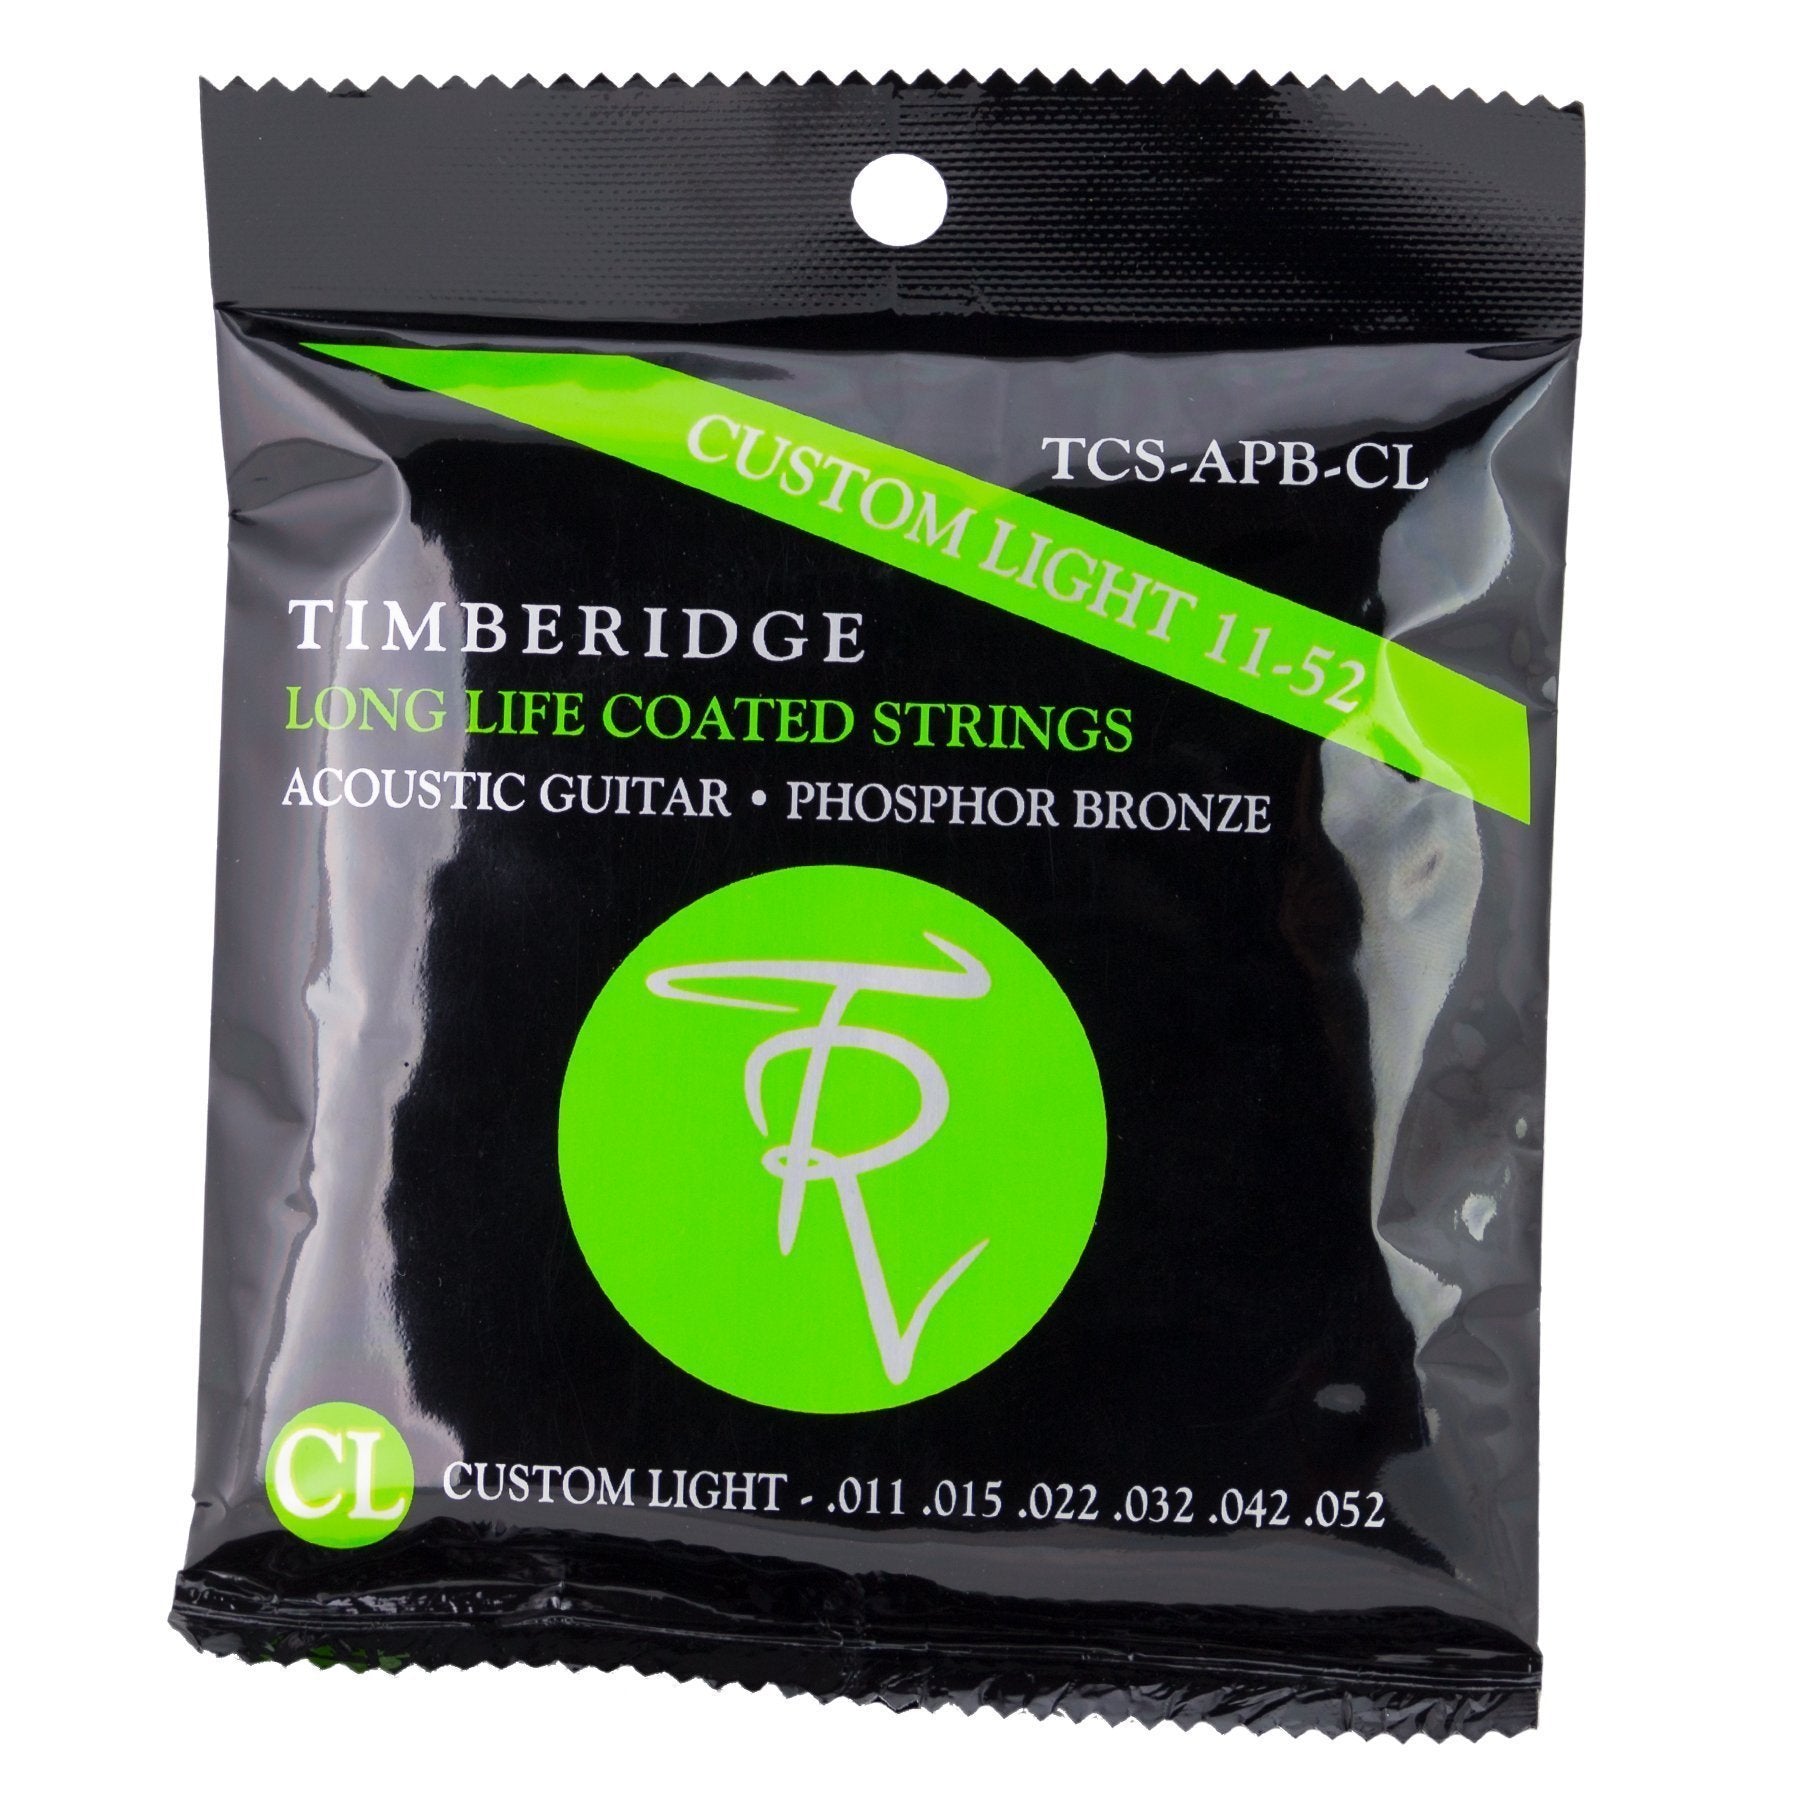 Timberidge Custom Light Phosphor Bronze Long Life Coated Acoustic Guitar Strings (11-52)-TCS-APB-CL